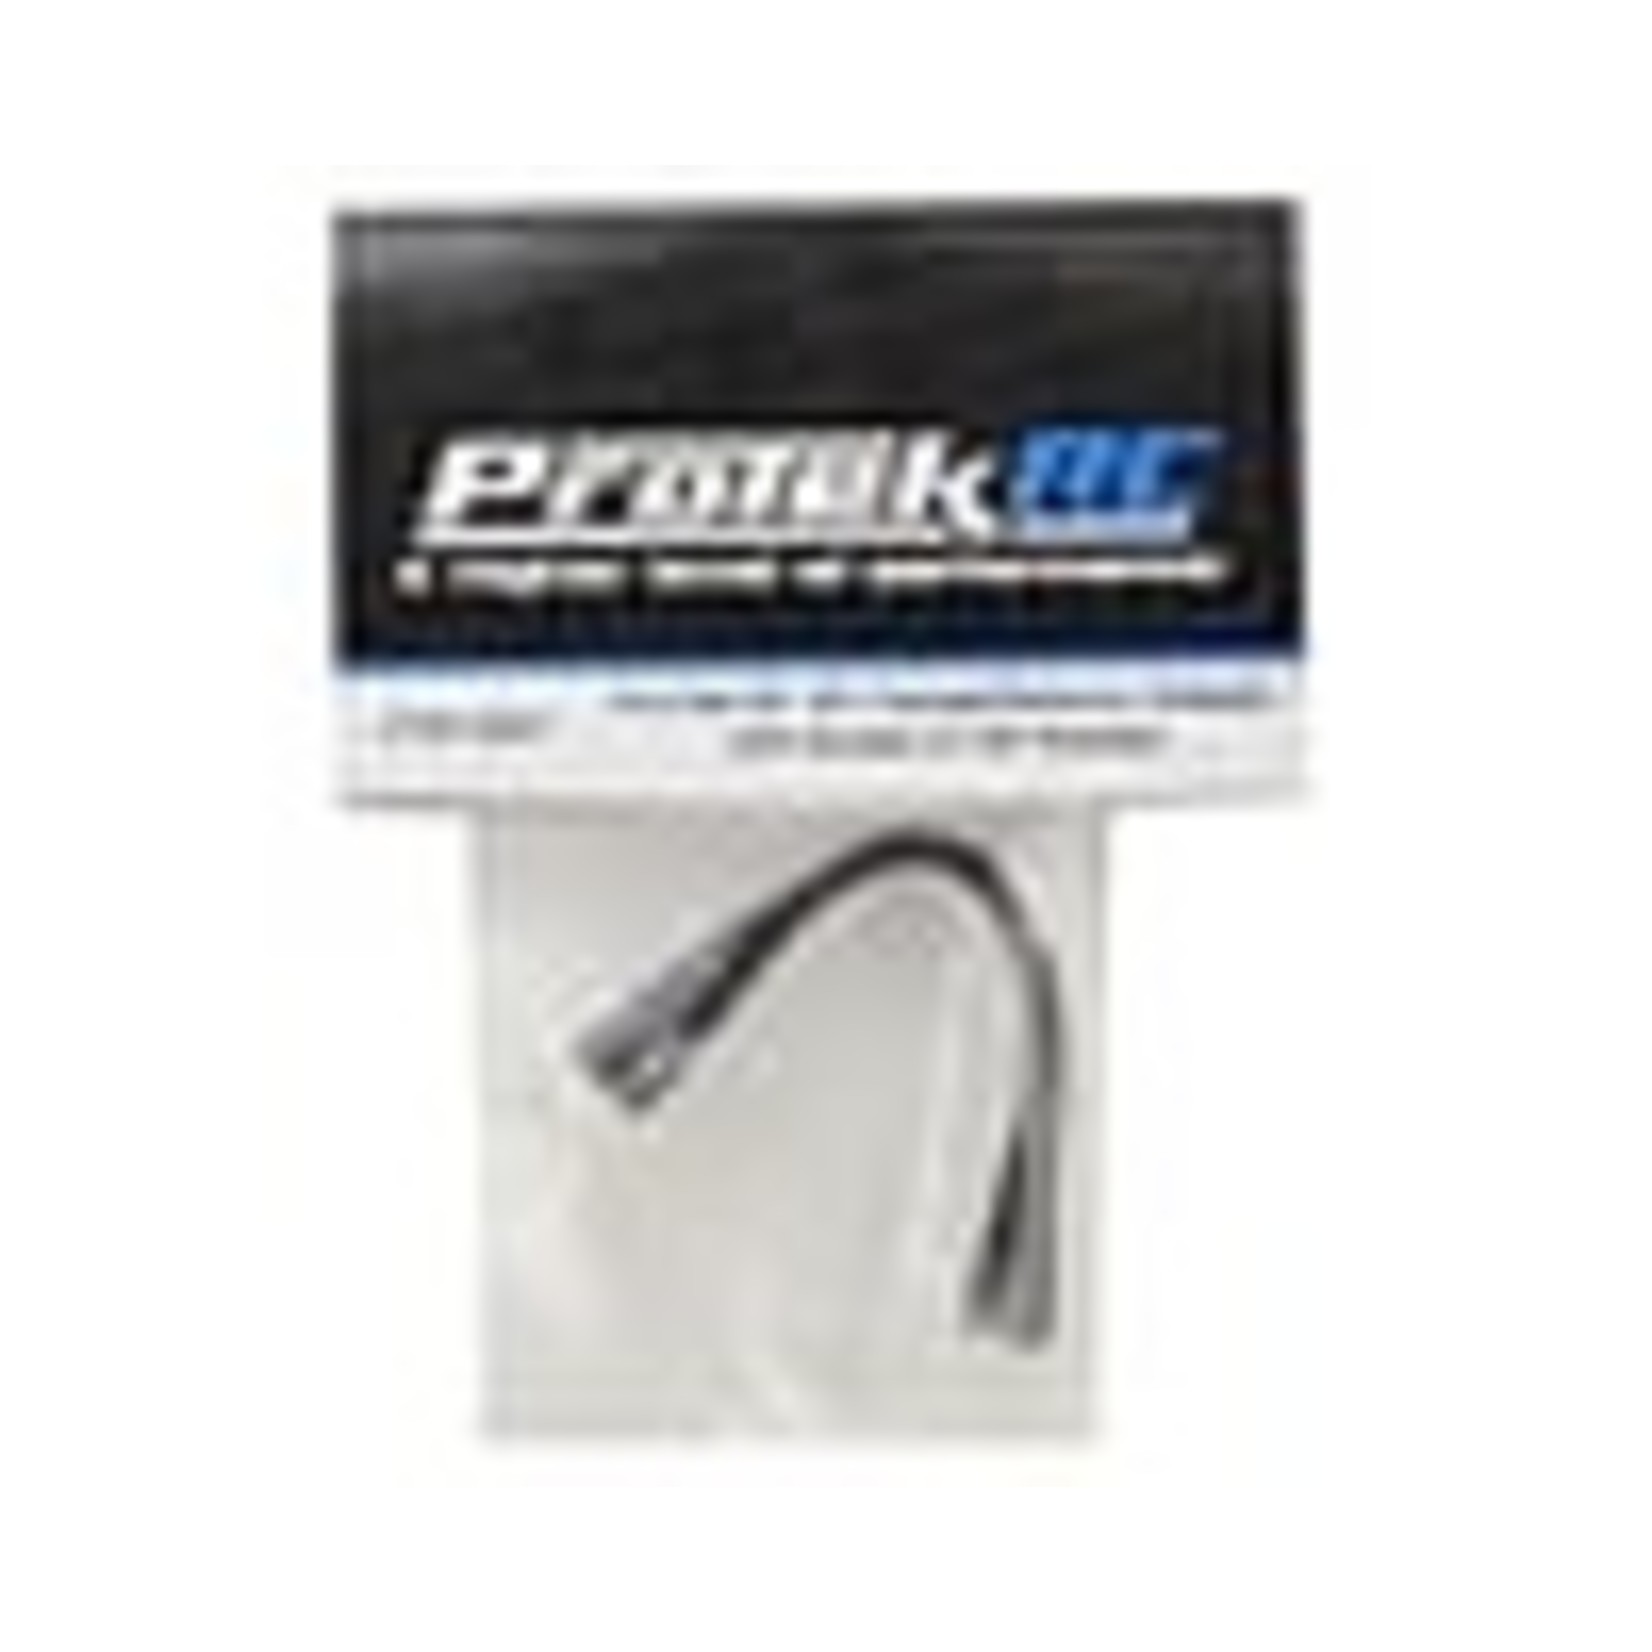 Protek RC PTK-5331   RC 4S LiPo Charge/Balance Adapter (XH female to XH female)